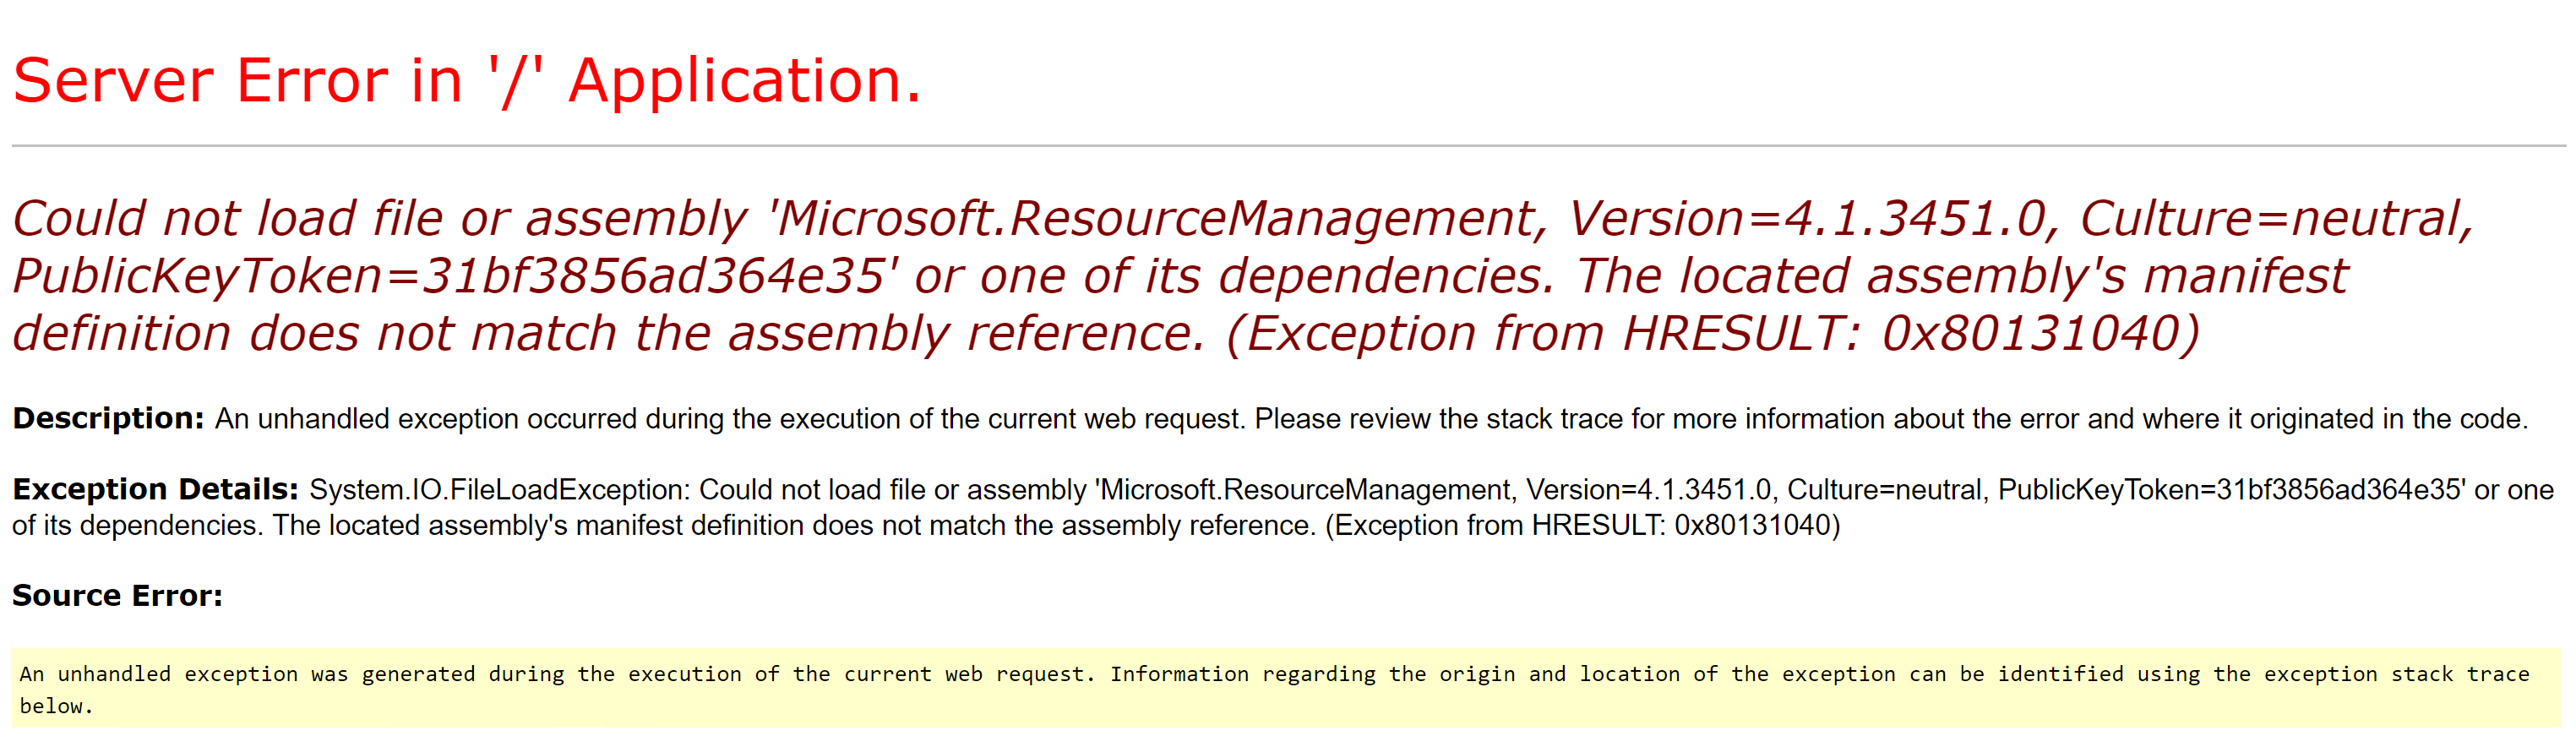 Error finding Microsoft.ResourceManagement DLL.PNG